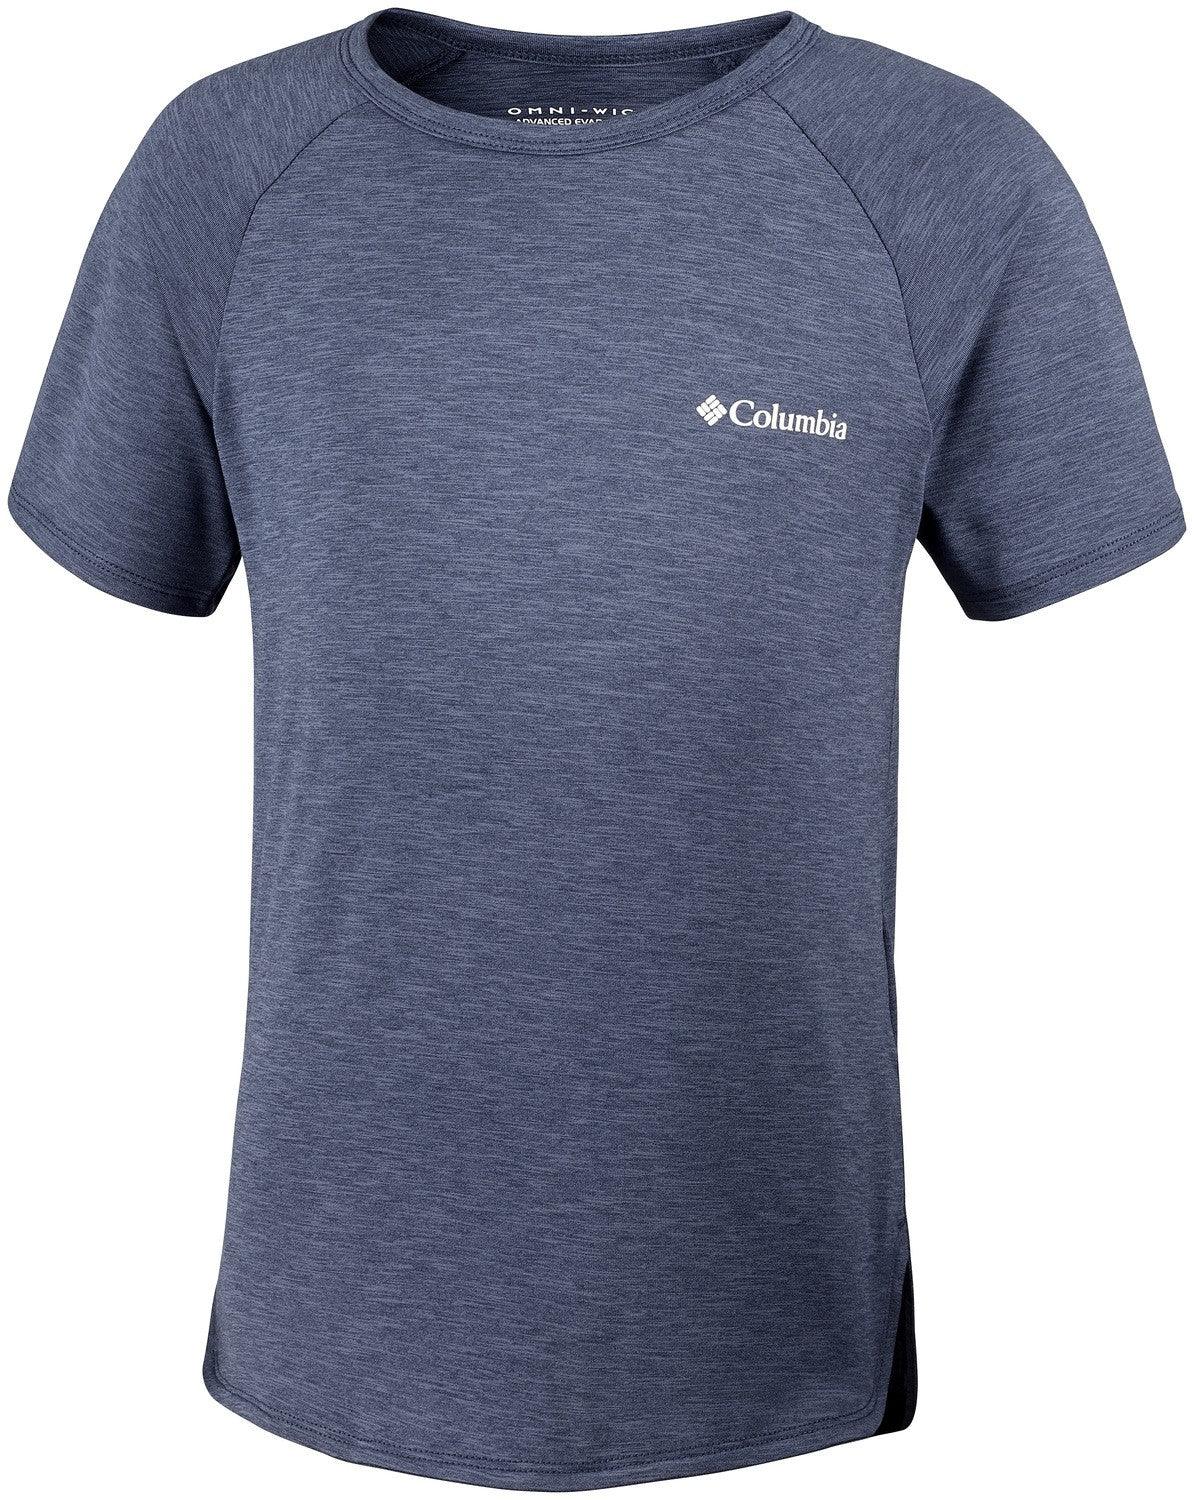 Columbia Silver Ridge UV Shirt korte mouw Nocturnal